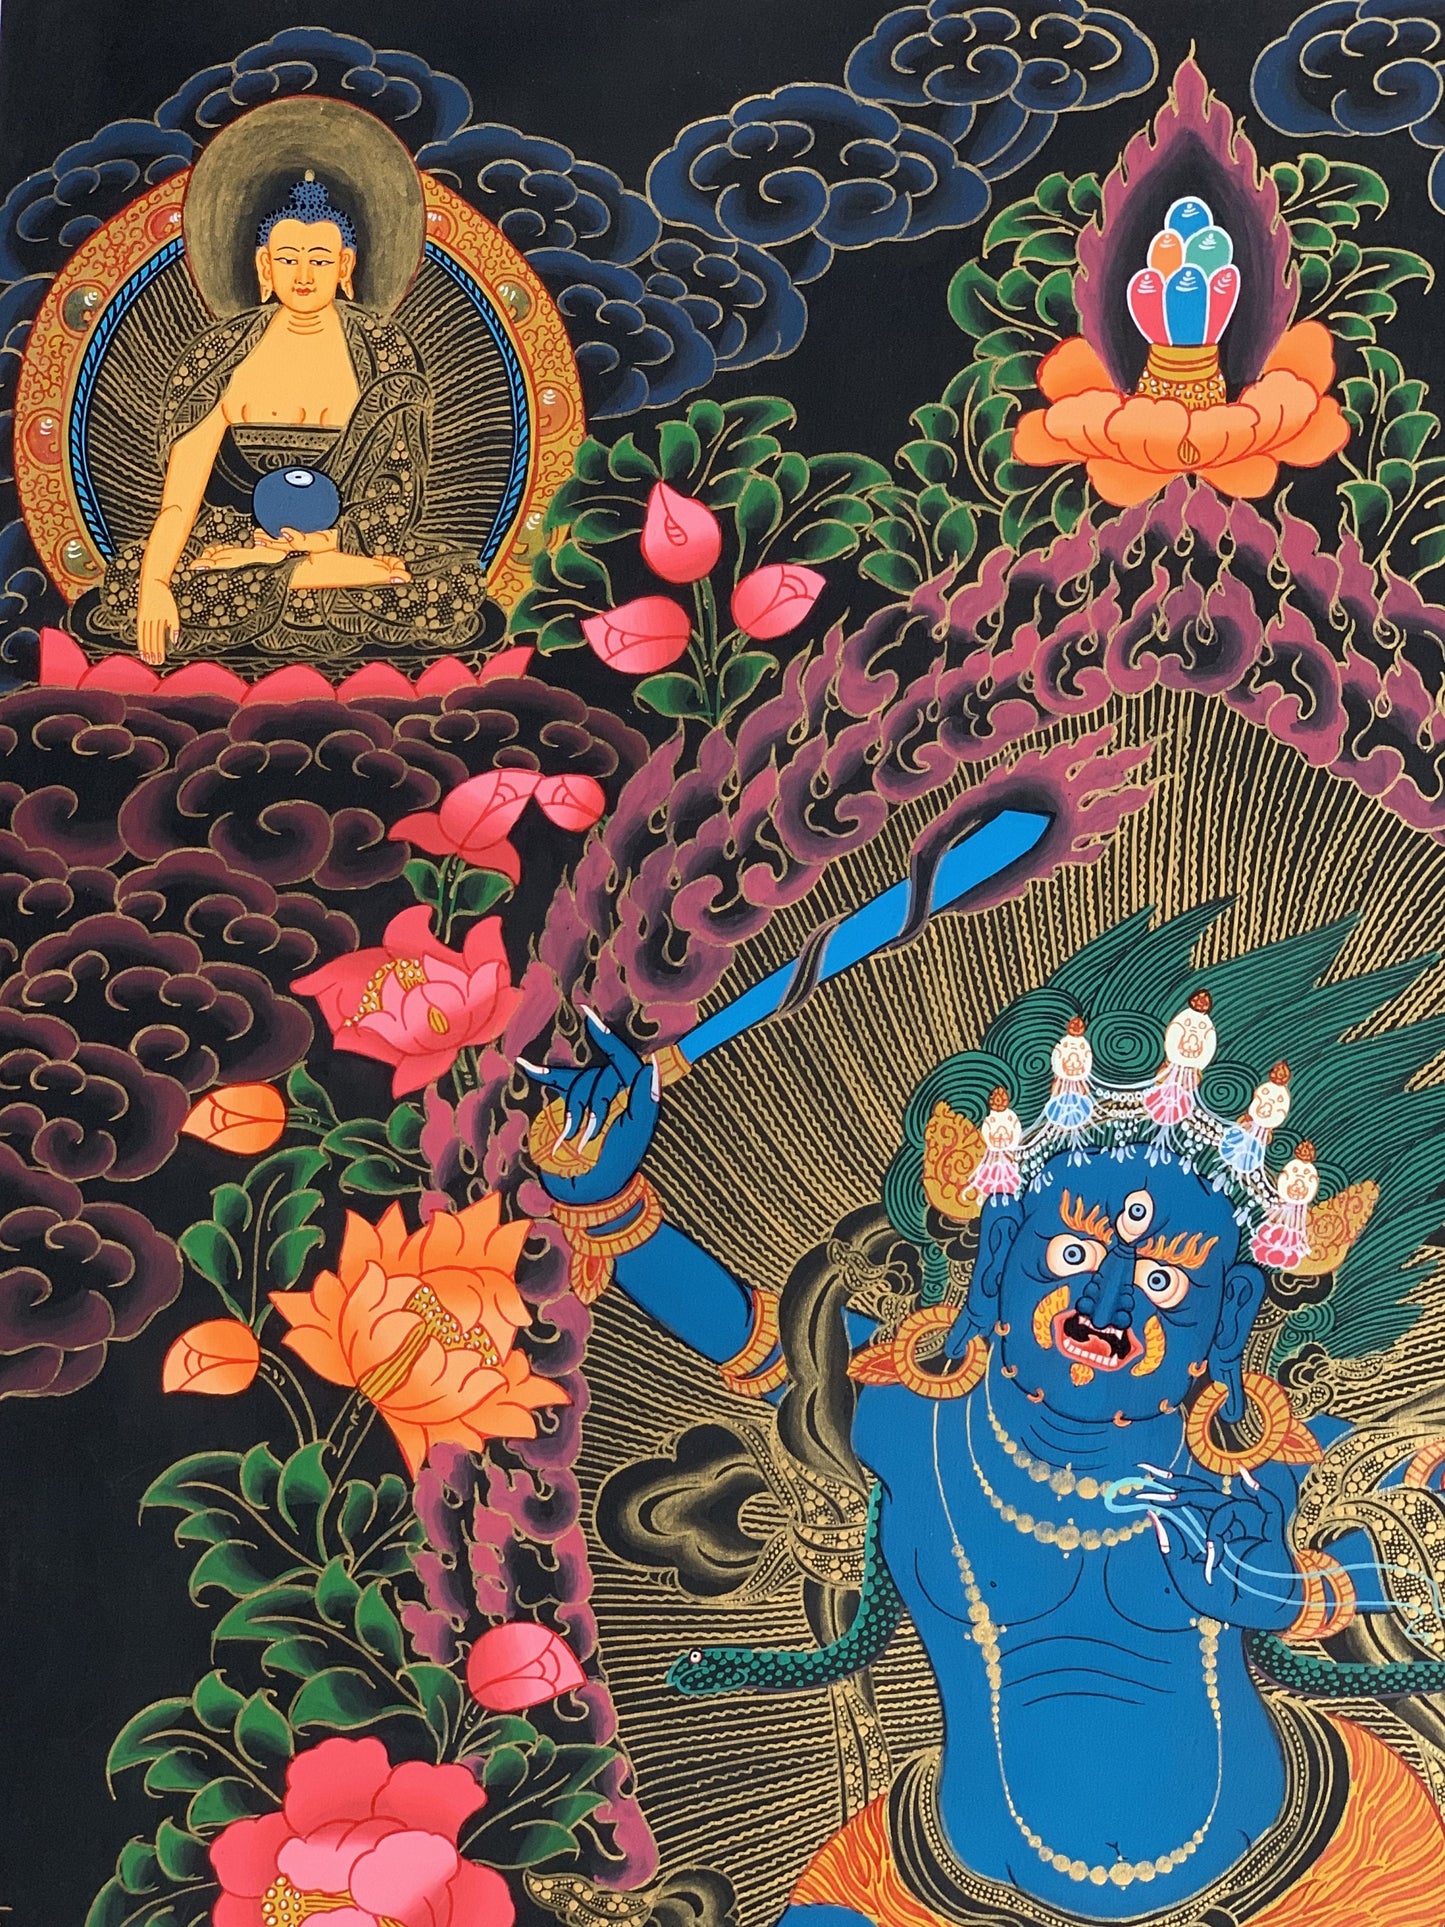 2 Armed Mahakala/ Kalabhairava Masterpiece Master Quality Original Tibetan Thangka Painting Compassion Meditation Art  21 x 27 -Inches